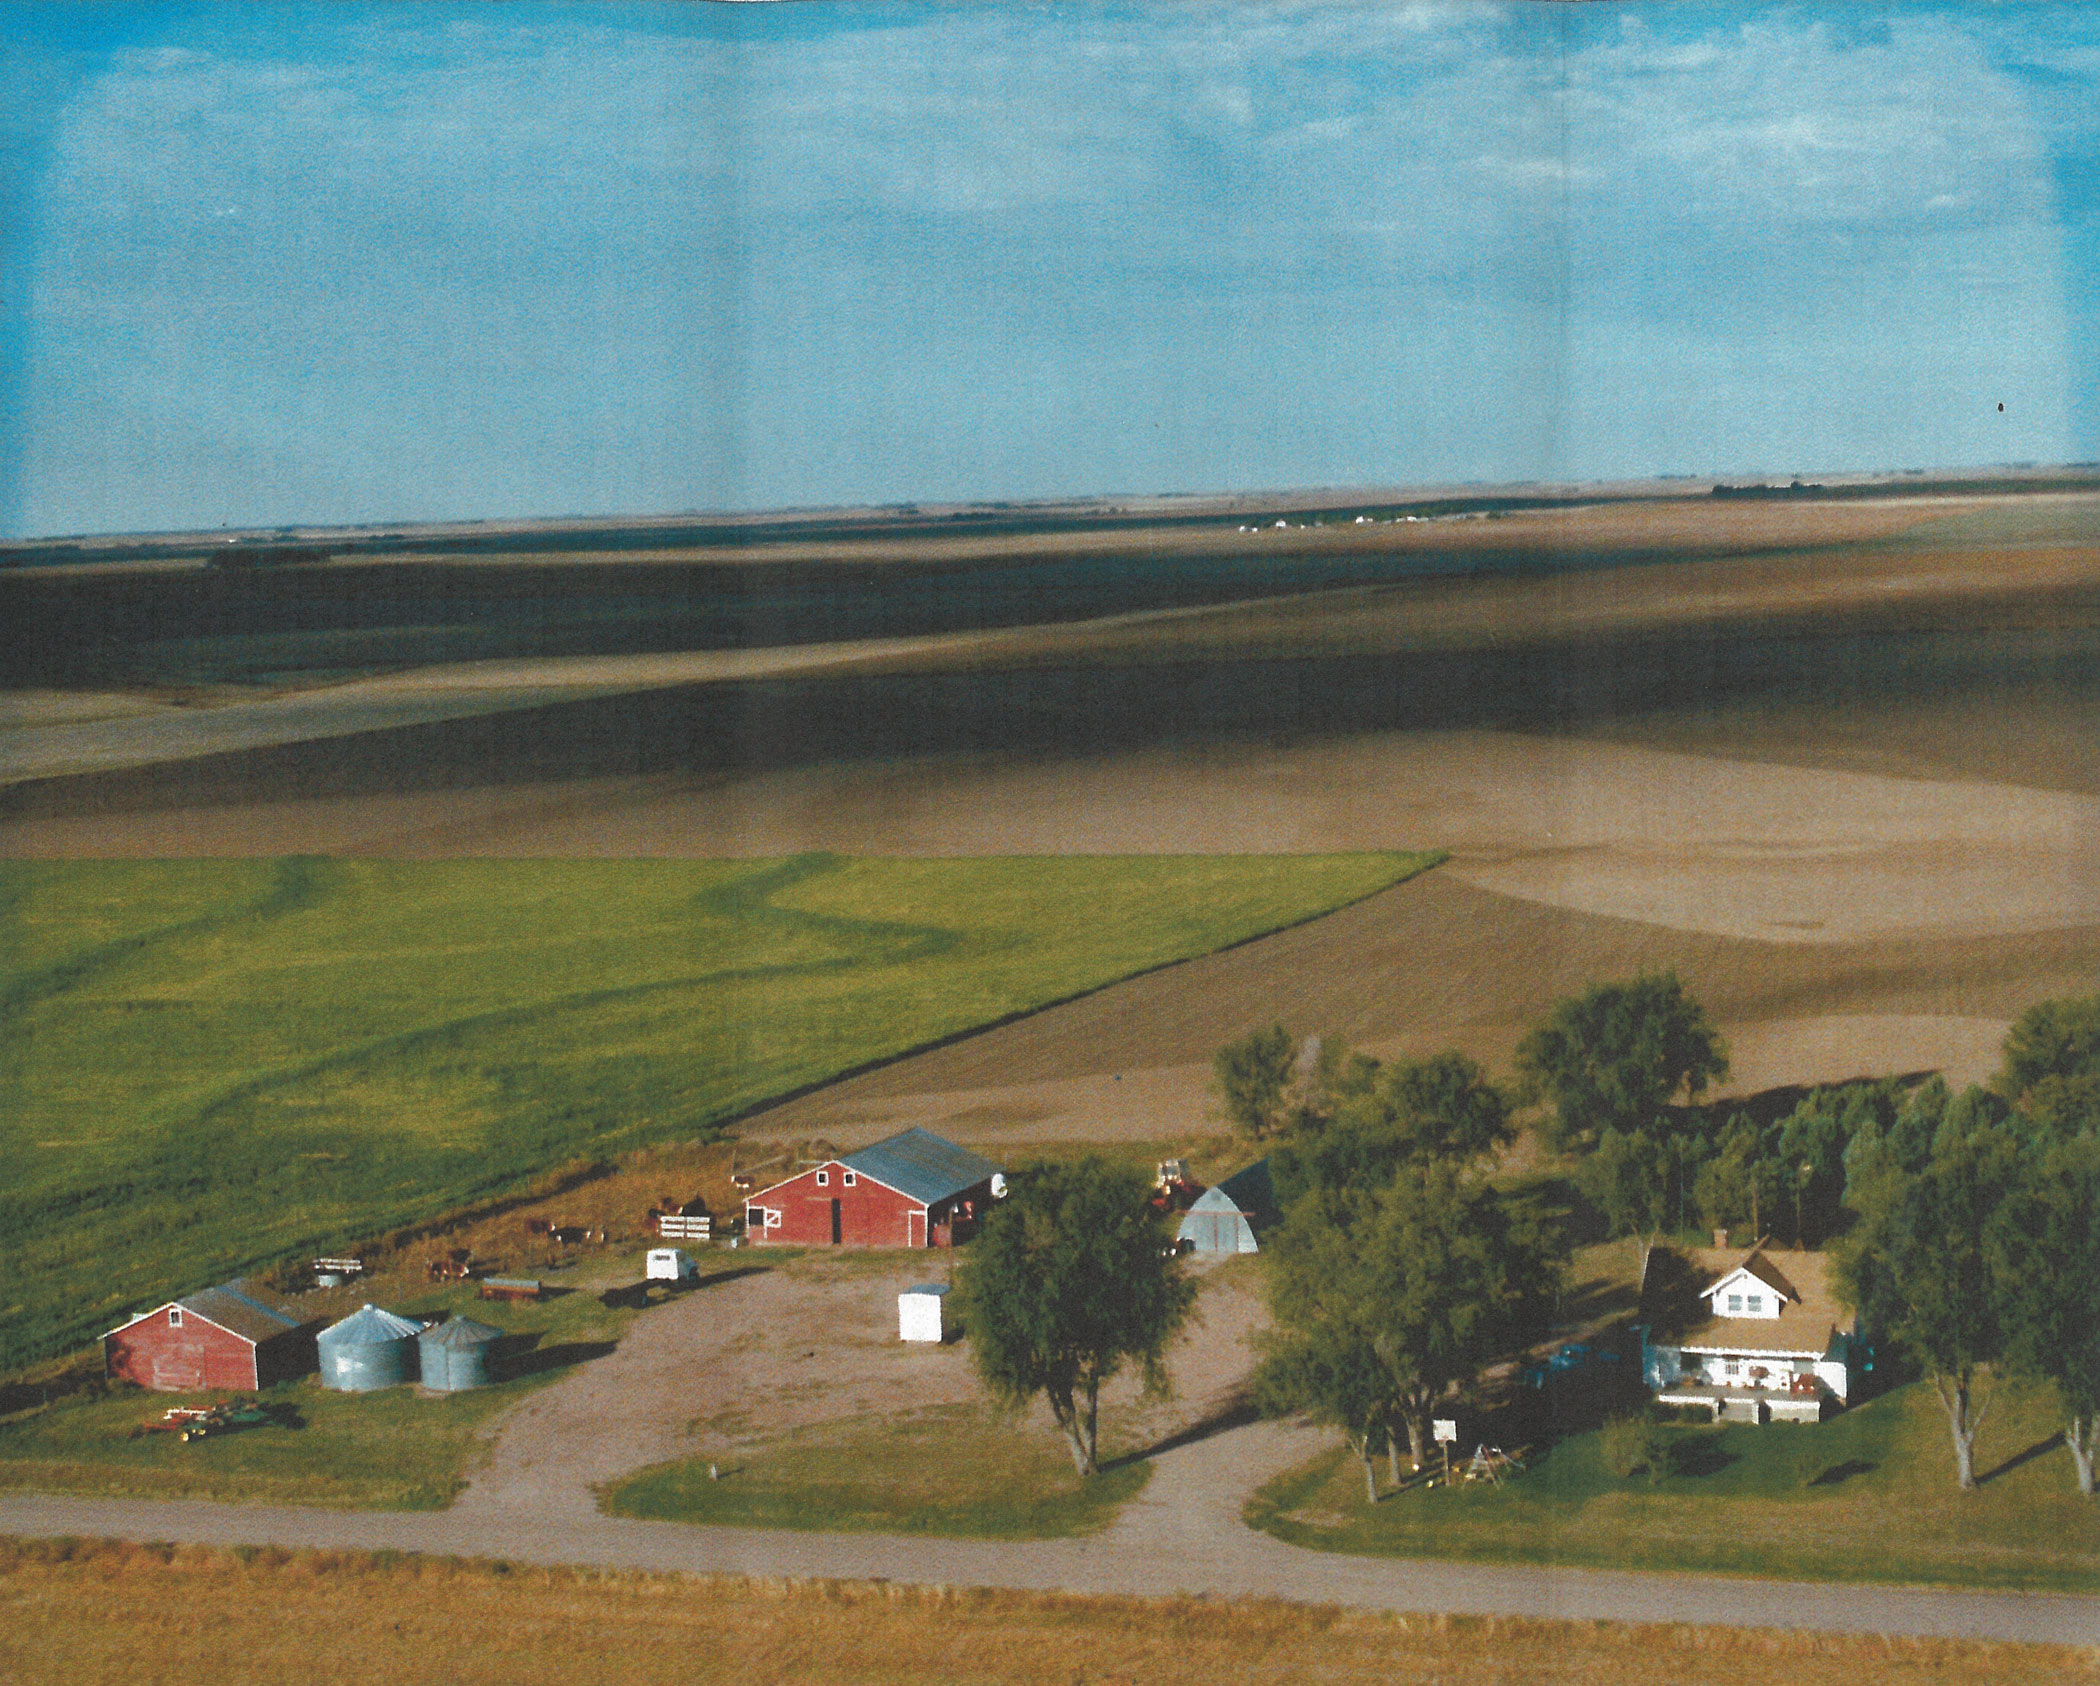 Aerial view of the Wernsman Family Farm.